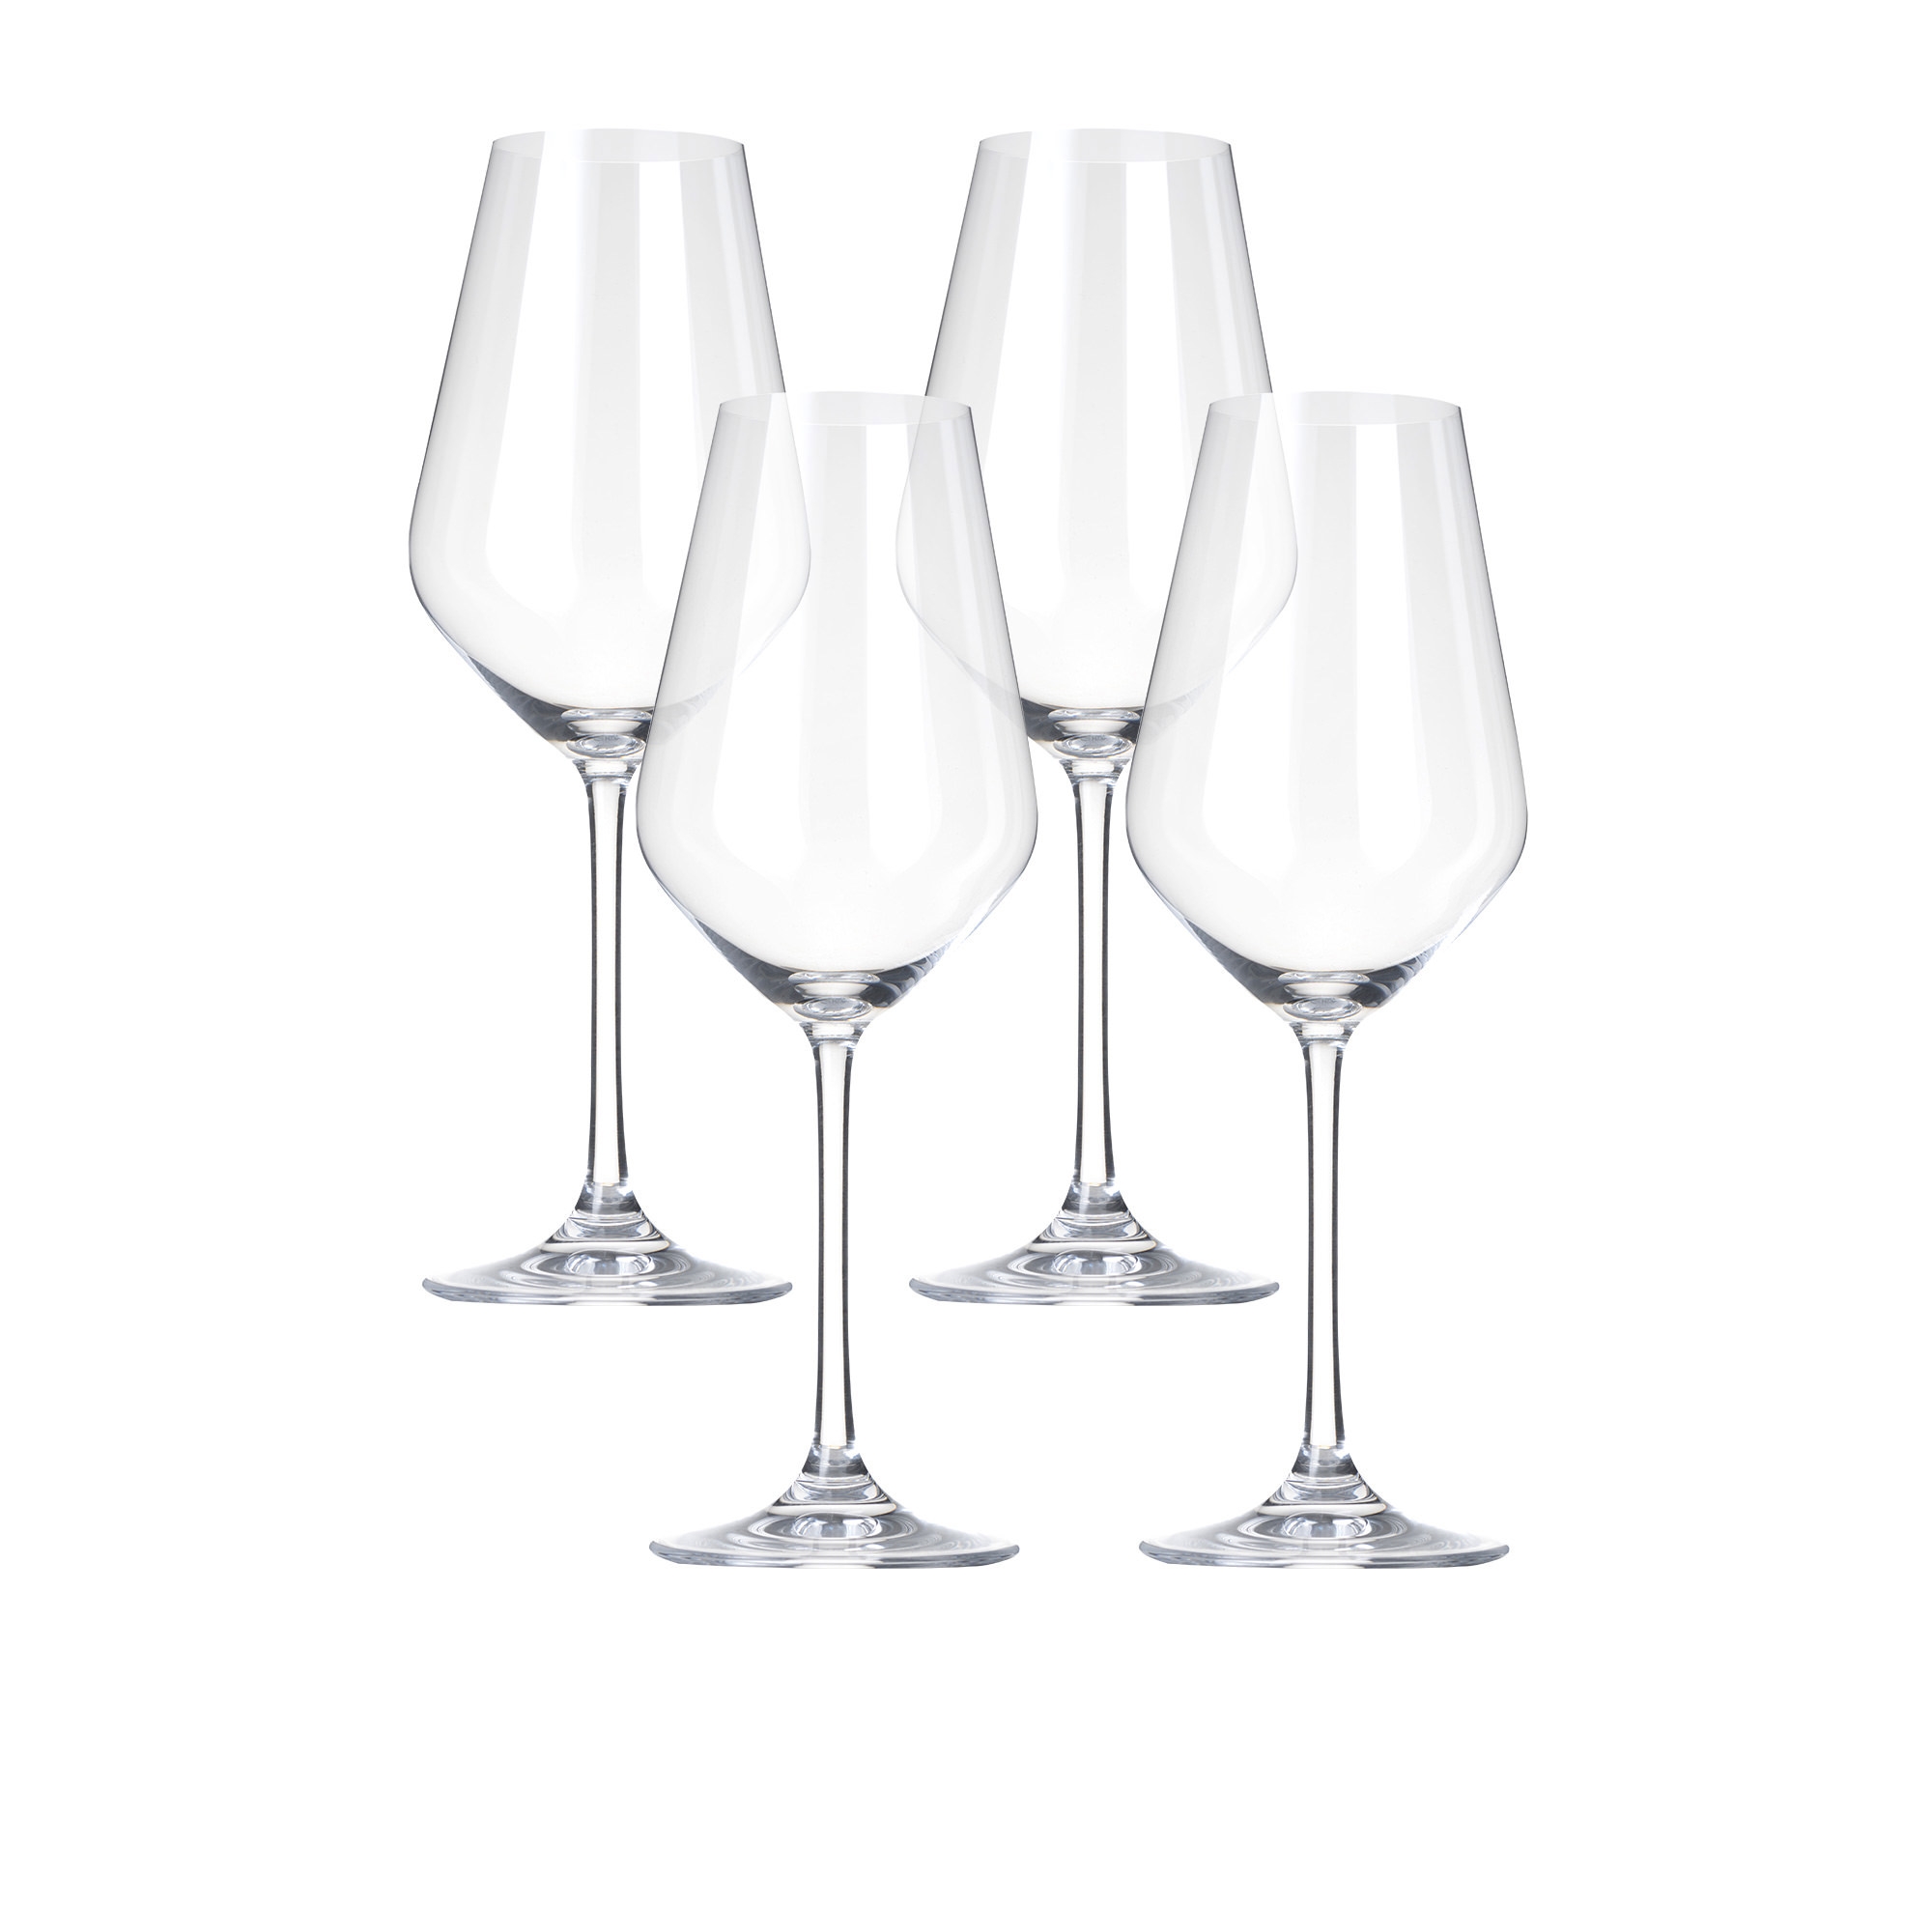 Le Creuset White Wine Glass 485ml Set of 4 Image 1